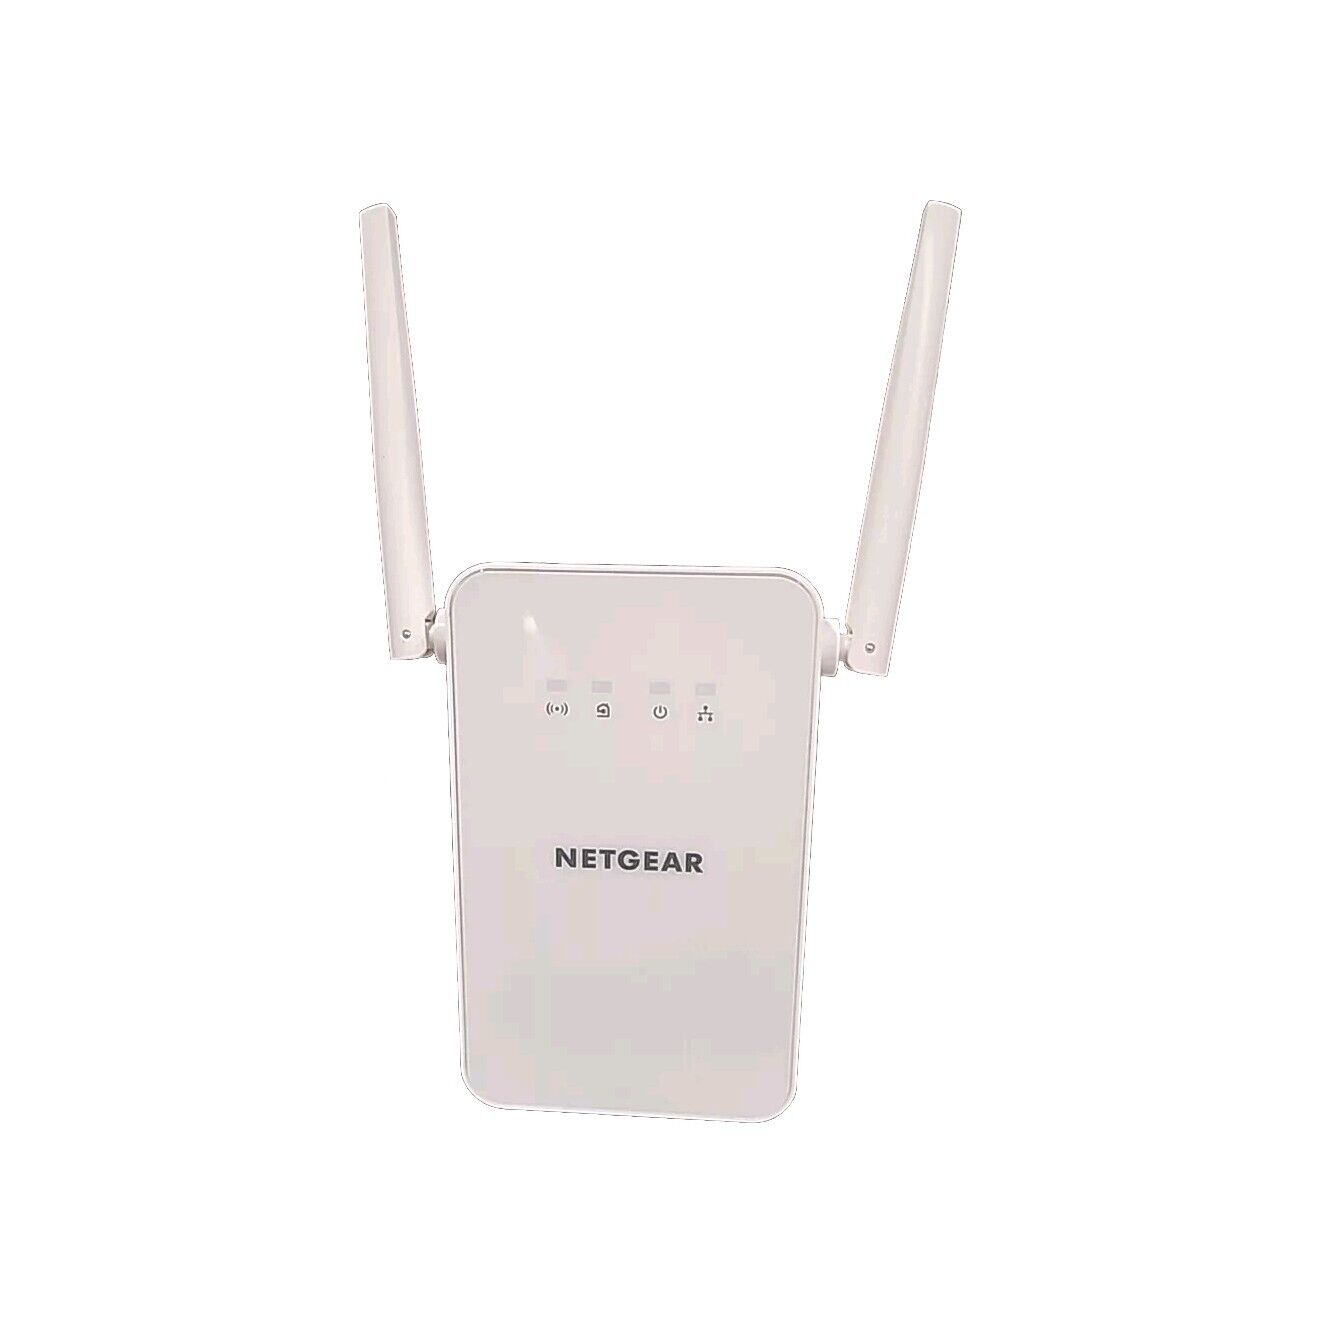 NETGEAR Powerline AC1000 Wi-Fi Access Point Extender PLW1000v2